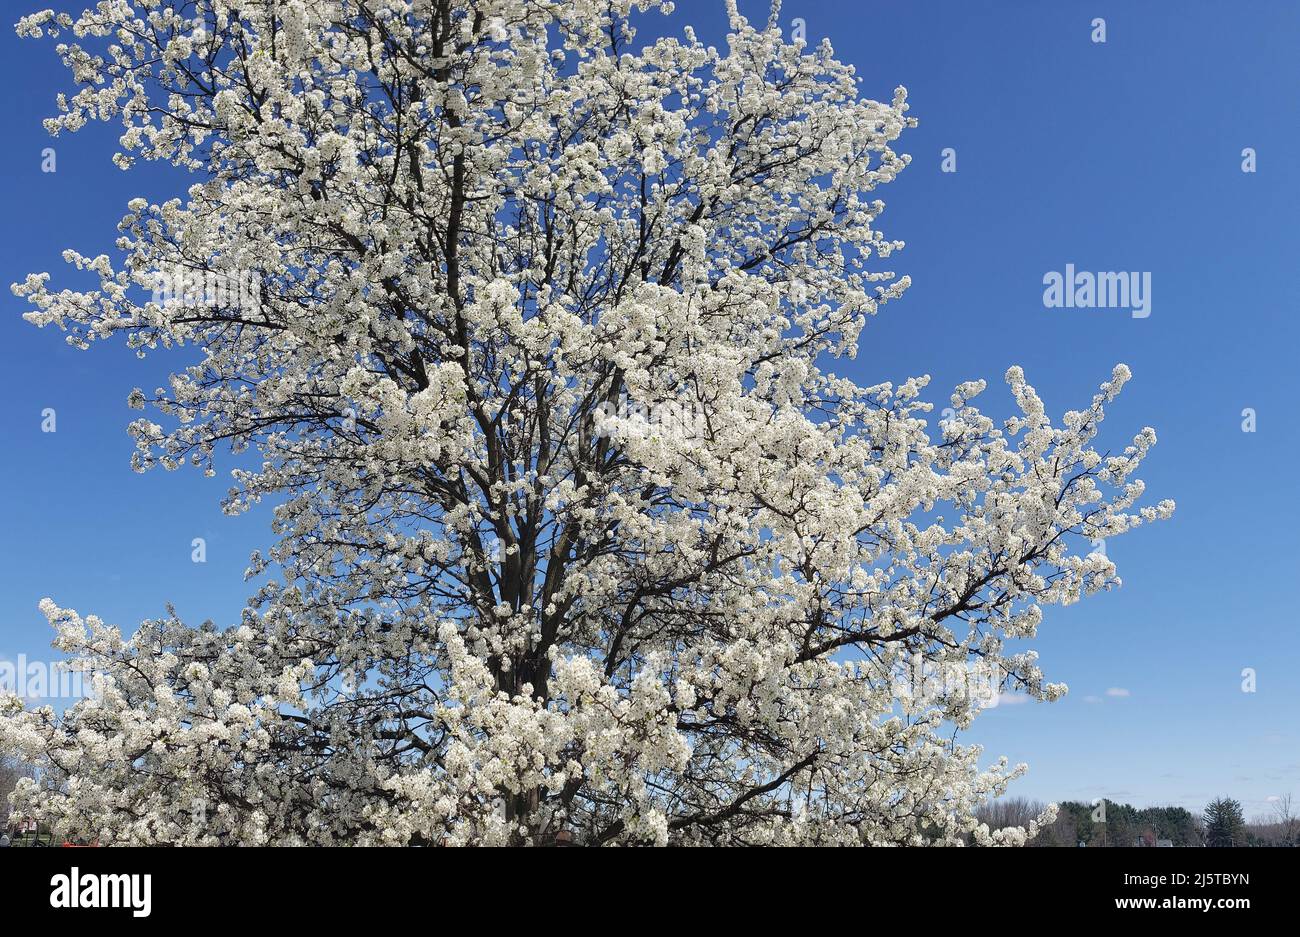 White flowering crabapple tree against a blue sky Stock Photo